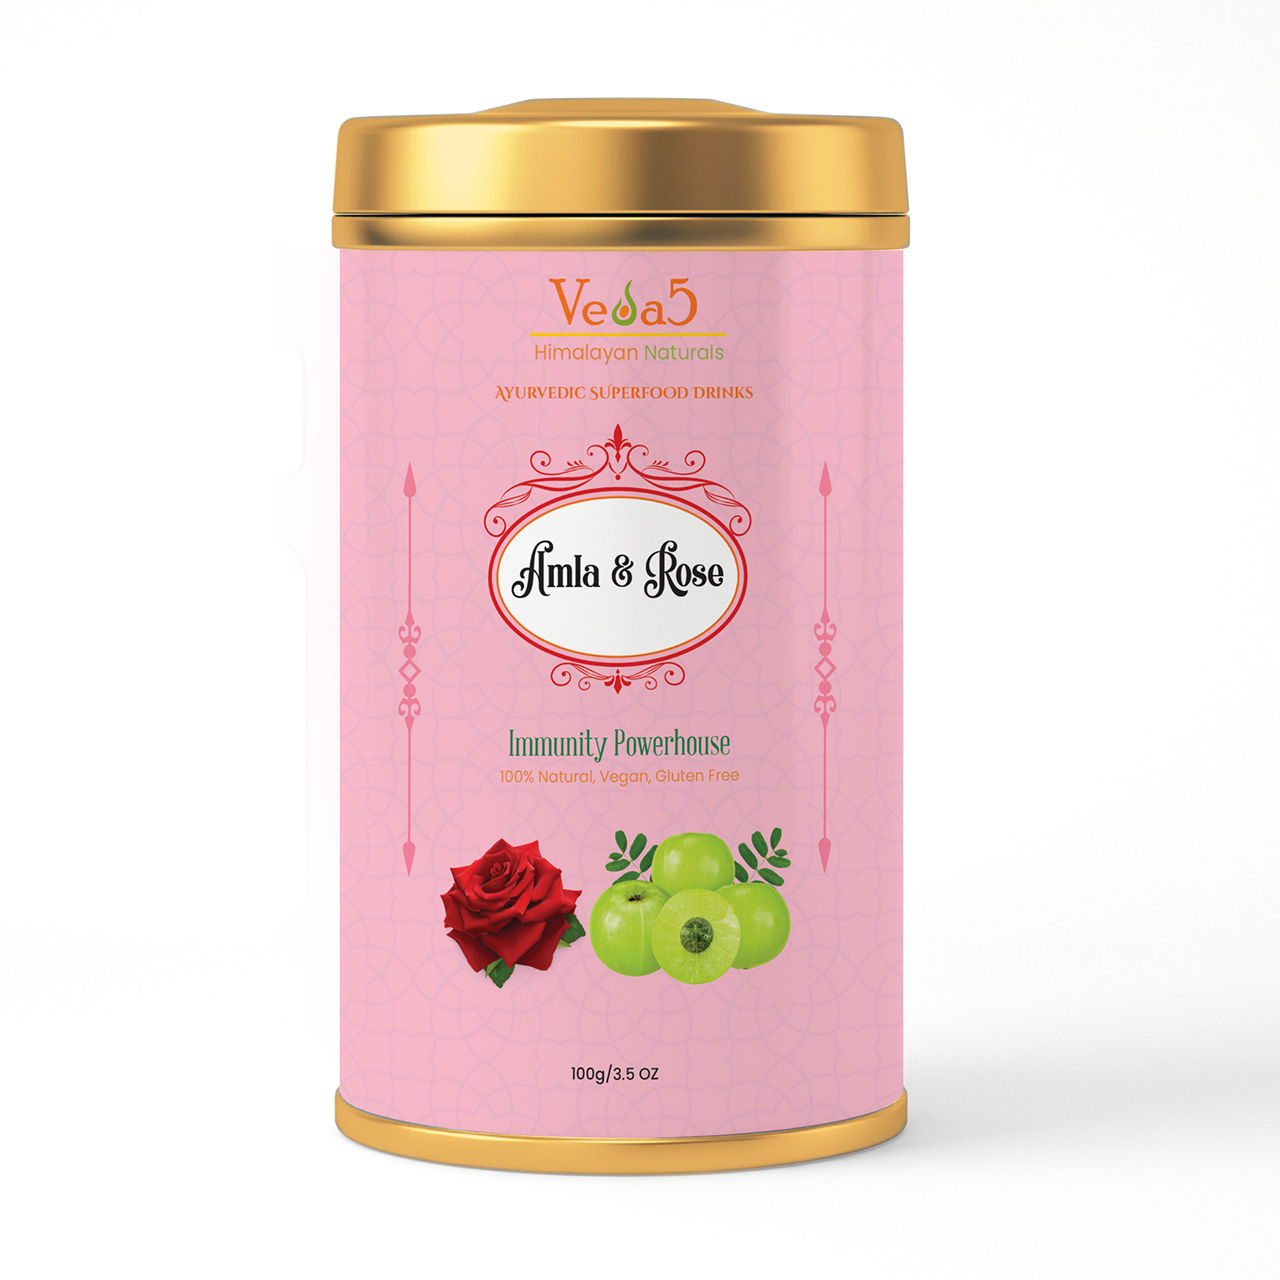 Amla and Rose Ayurvedic Superfood Drink Immunity Powerhouse Veda5 Himalayan Naturals